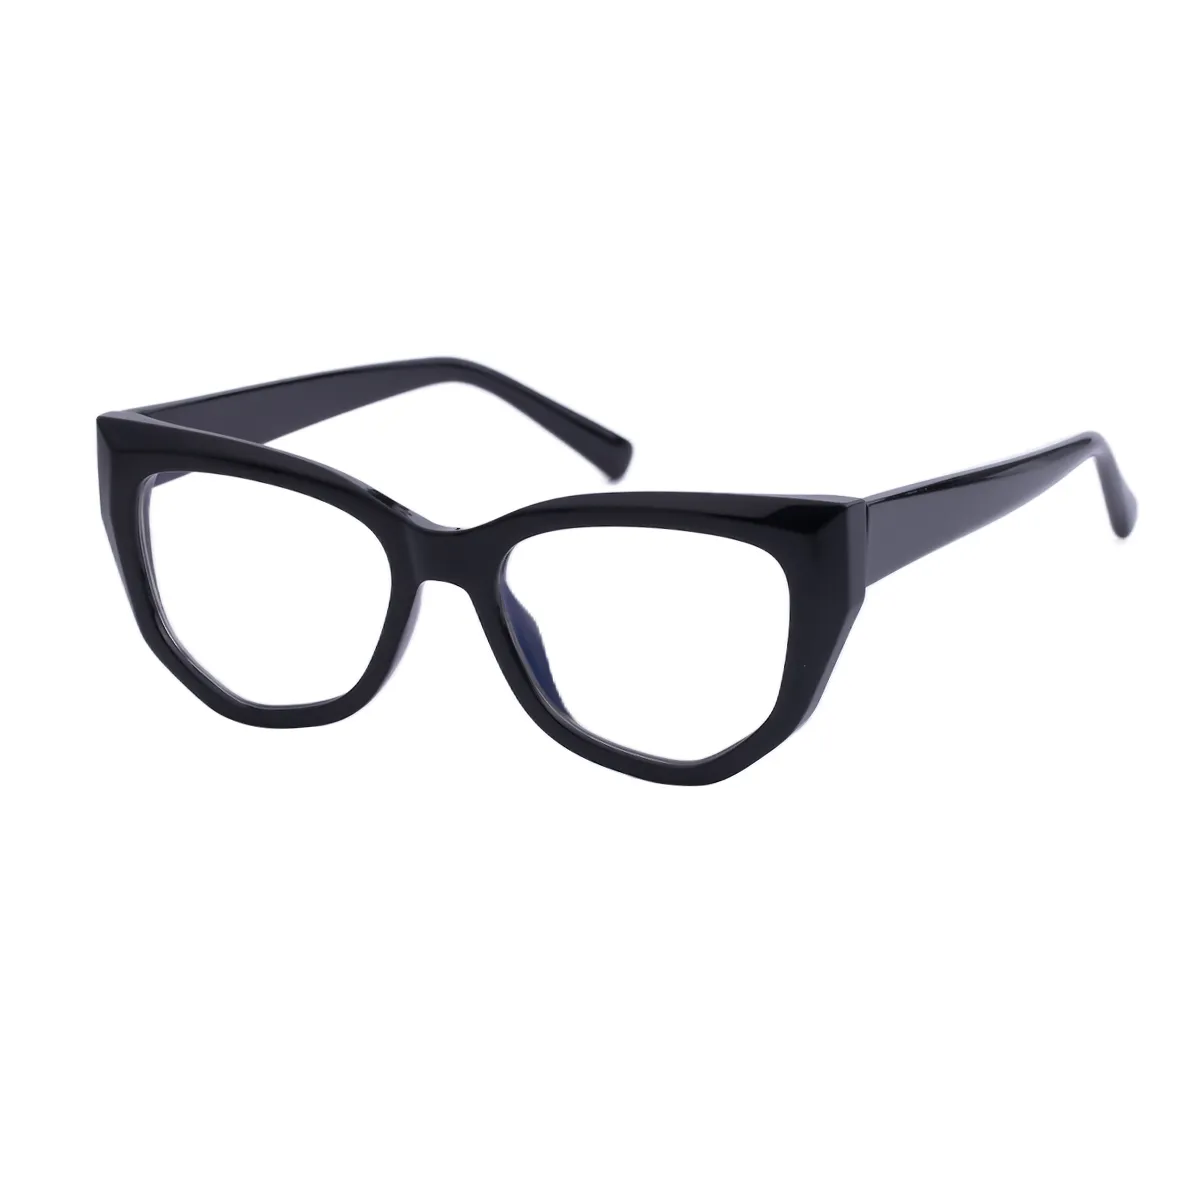 Hedy - Geometric Black Glasses for Women - EFE